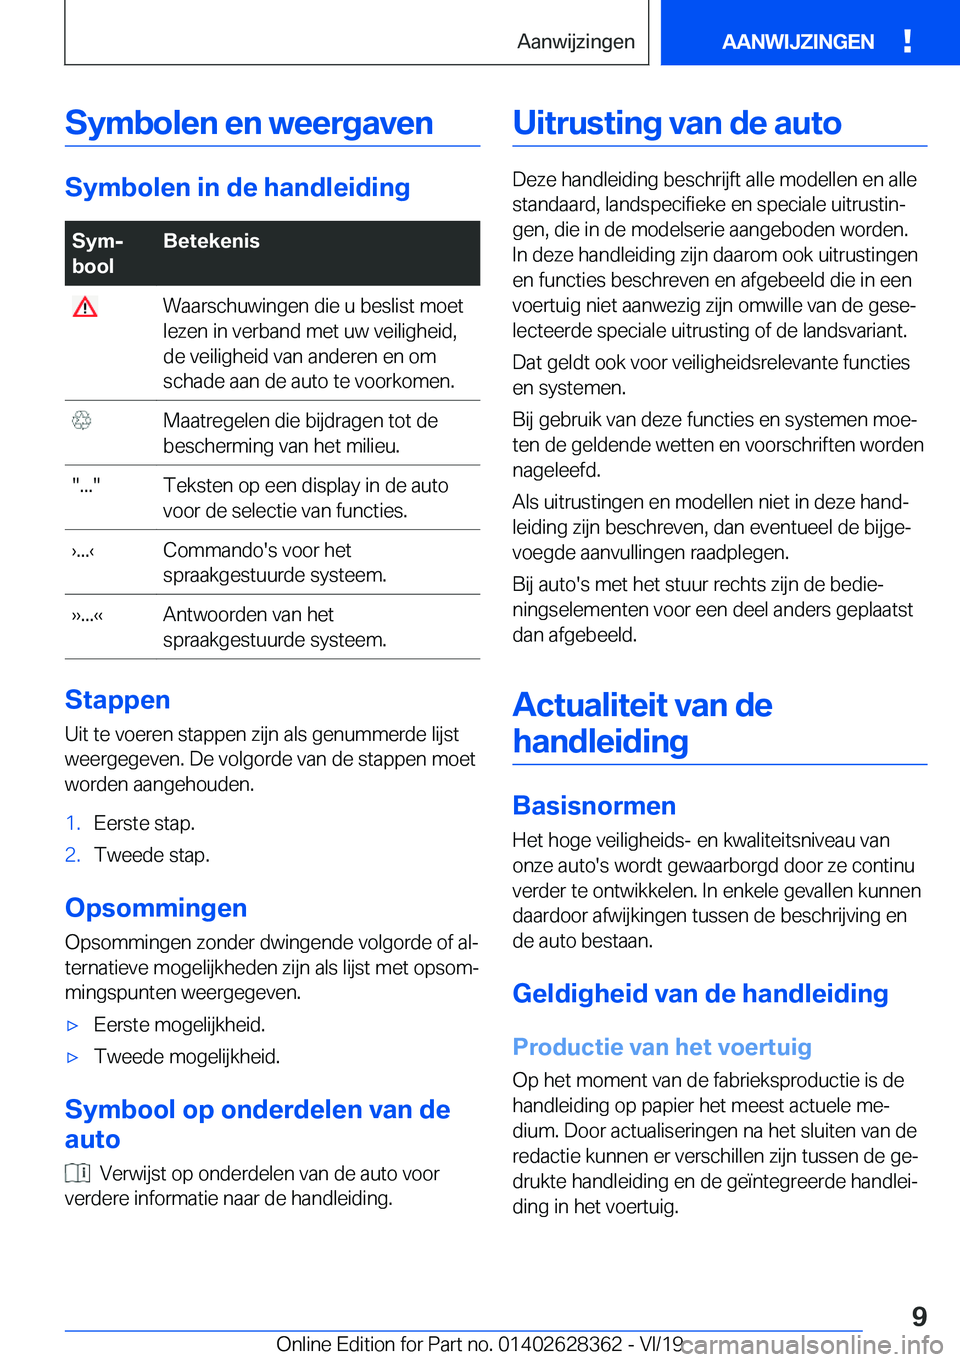 BMW 8 SERIES COUPE 2020  Instructieboekjes (in Dutch) �S�y�m�b�o�l�e�n��e�n��w�e�e�r�g�a�v�e�n
�S�y�m�b�o�l�e�n��i�n��d�e��h�a�n�d�l�e�i�d�i�n�g
�S�y�mj
�b�o�o�l�B�e�t�e�k�e�n�i�s��W�a�a�r�s�c�h�u�w�i�n�g�e�n��d�i�e��u��b�e�s�l�i�s�t��m�o�e�t
